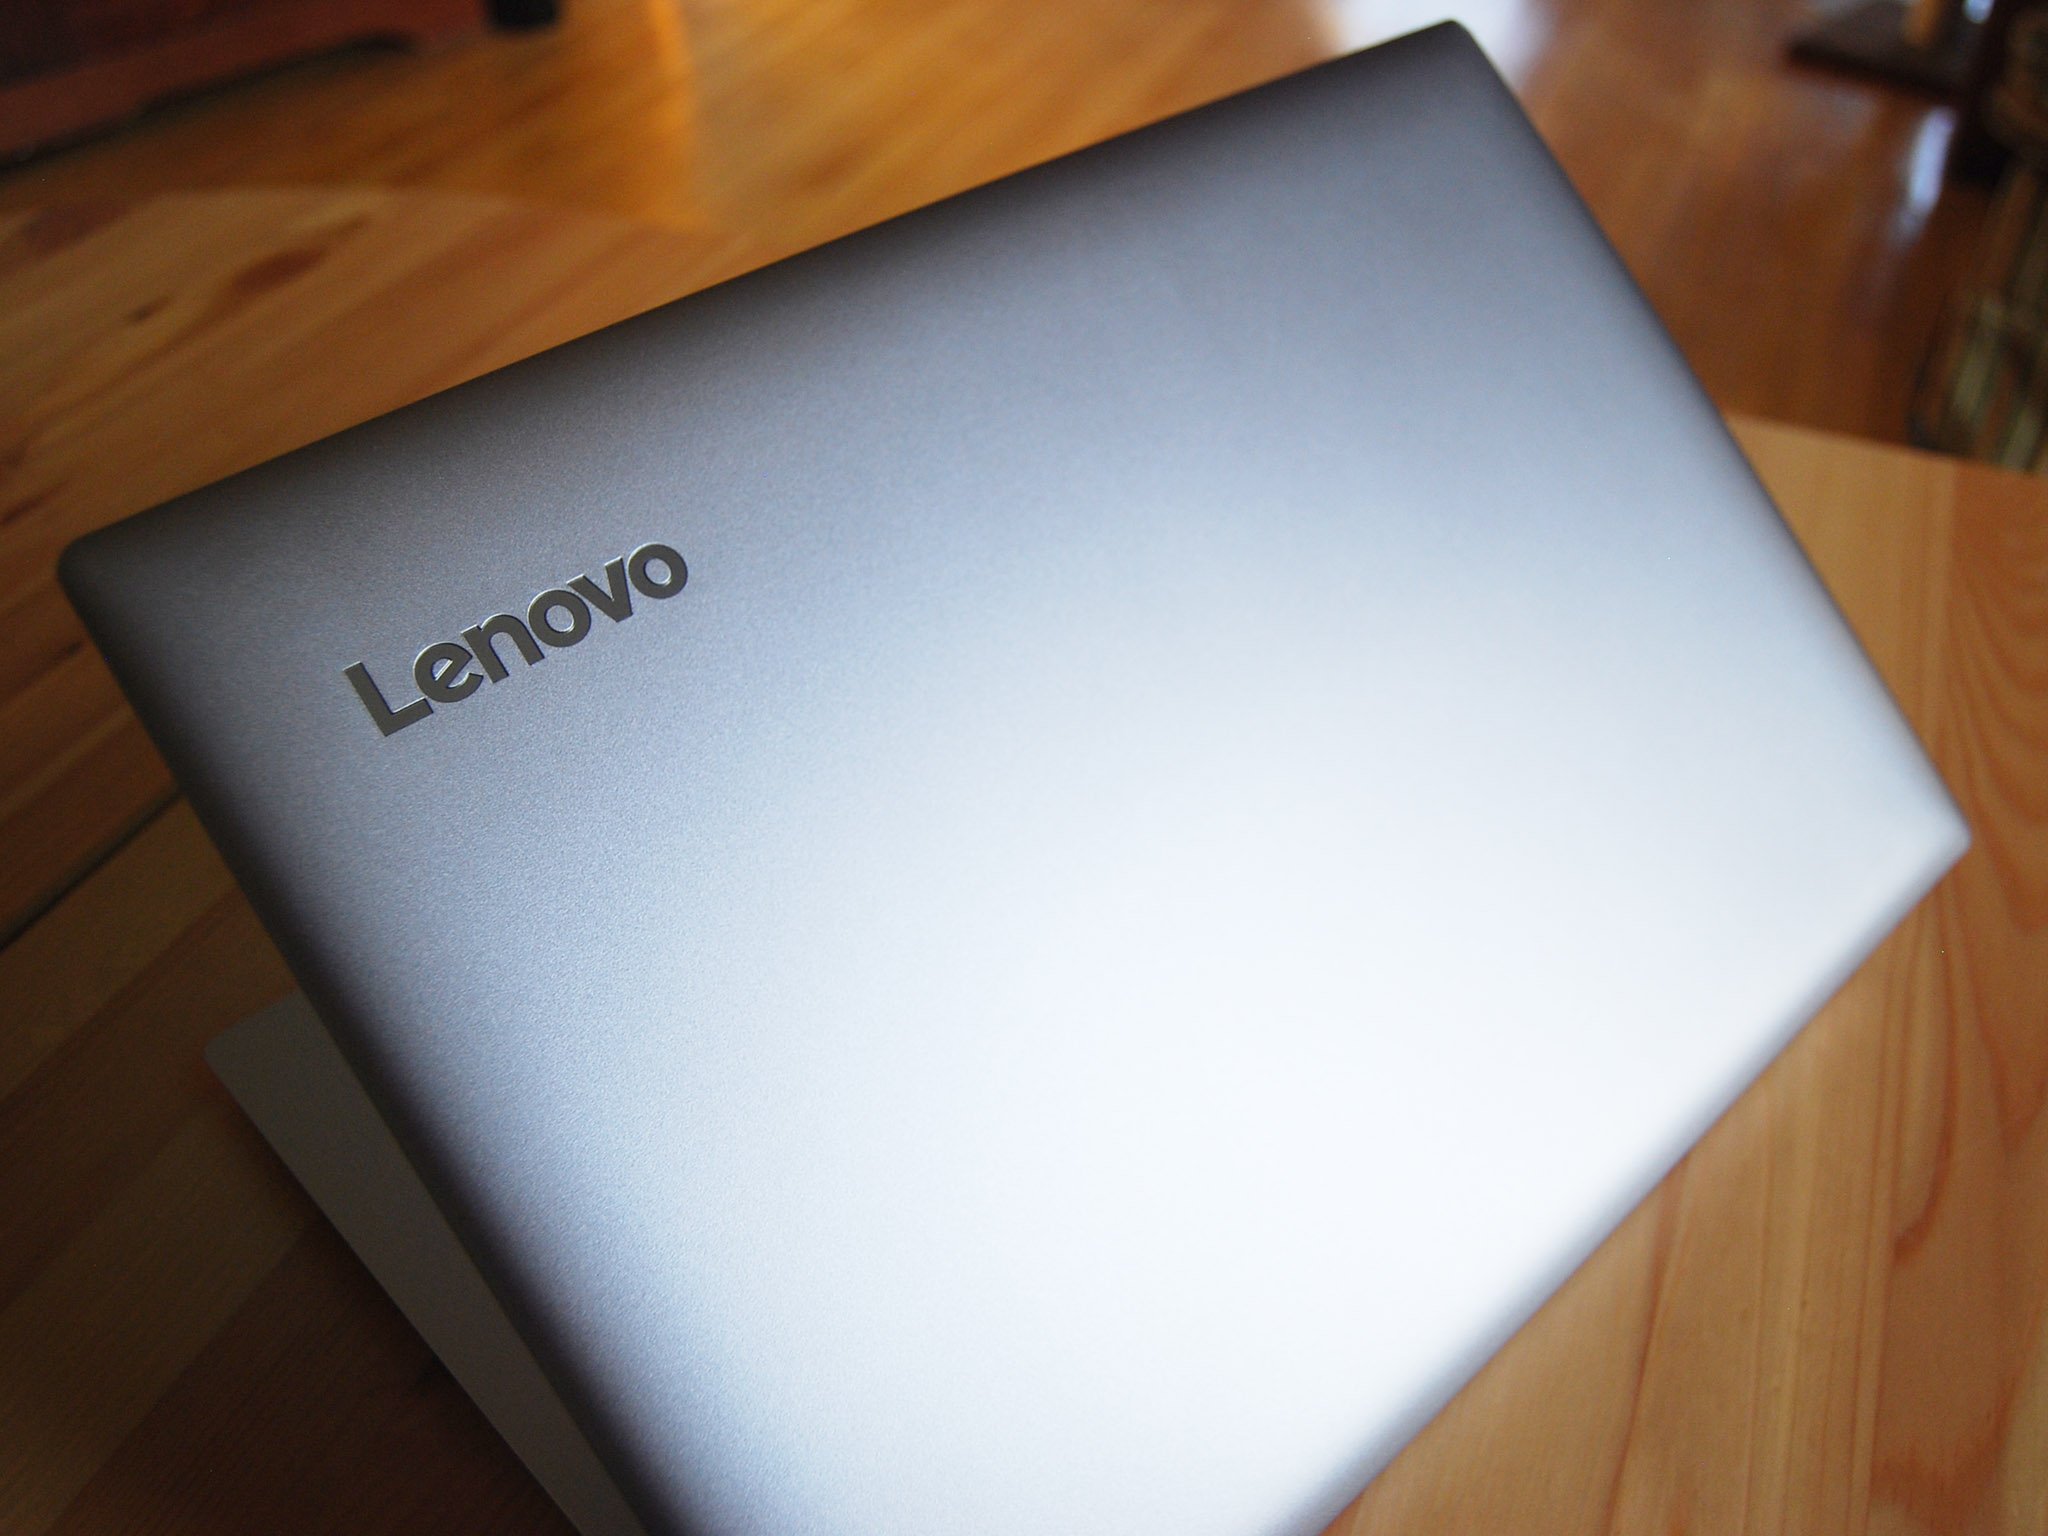 Lenovo IdeaPad 120s review: An all-around average productivity PC 